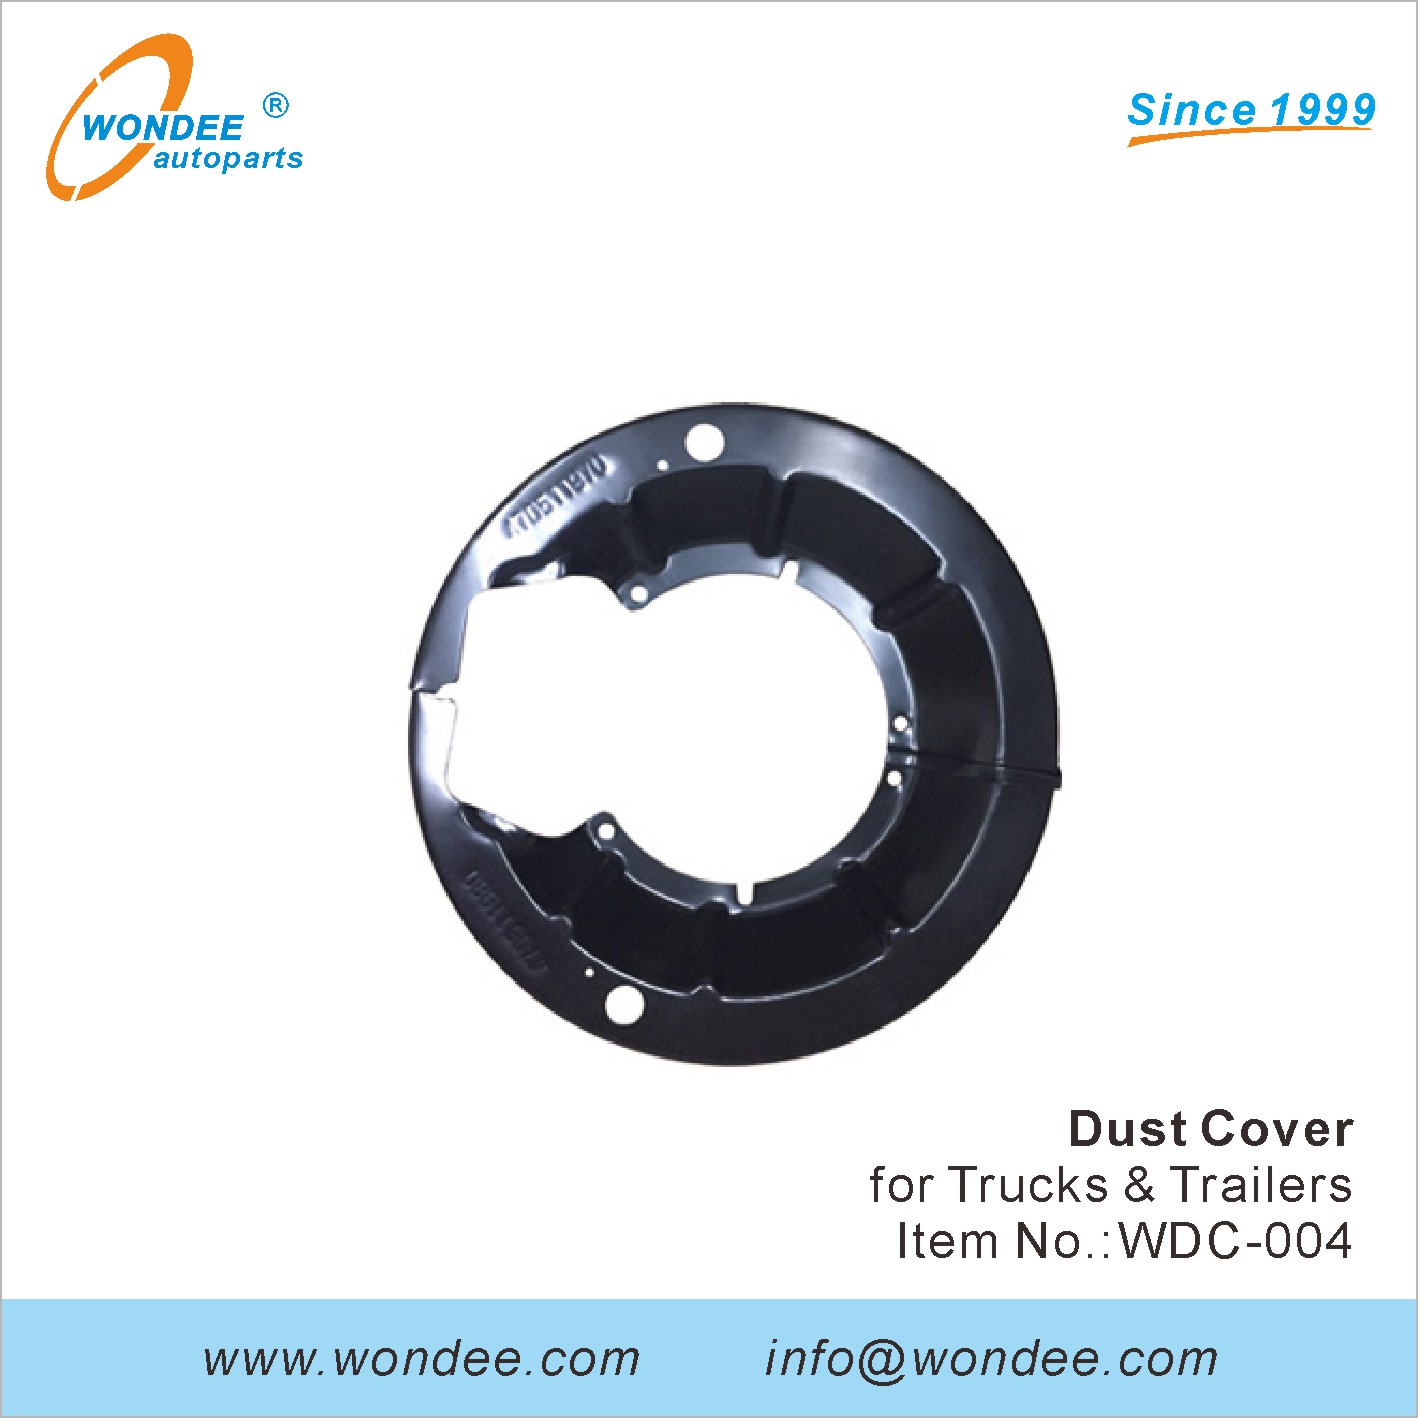 WONDEE dust cover (4)